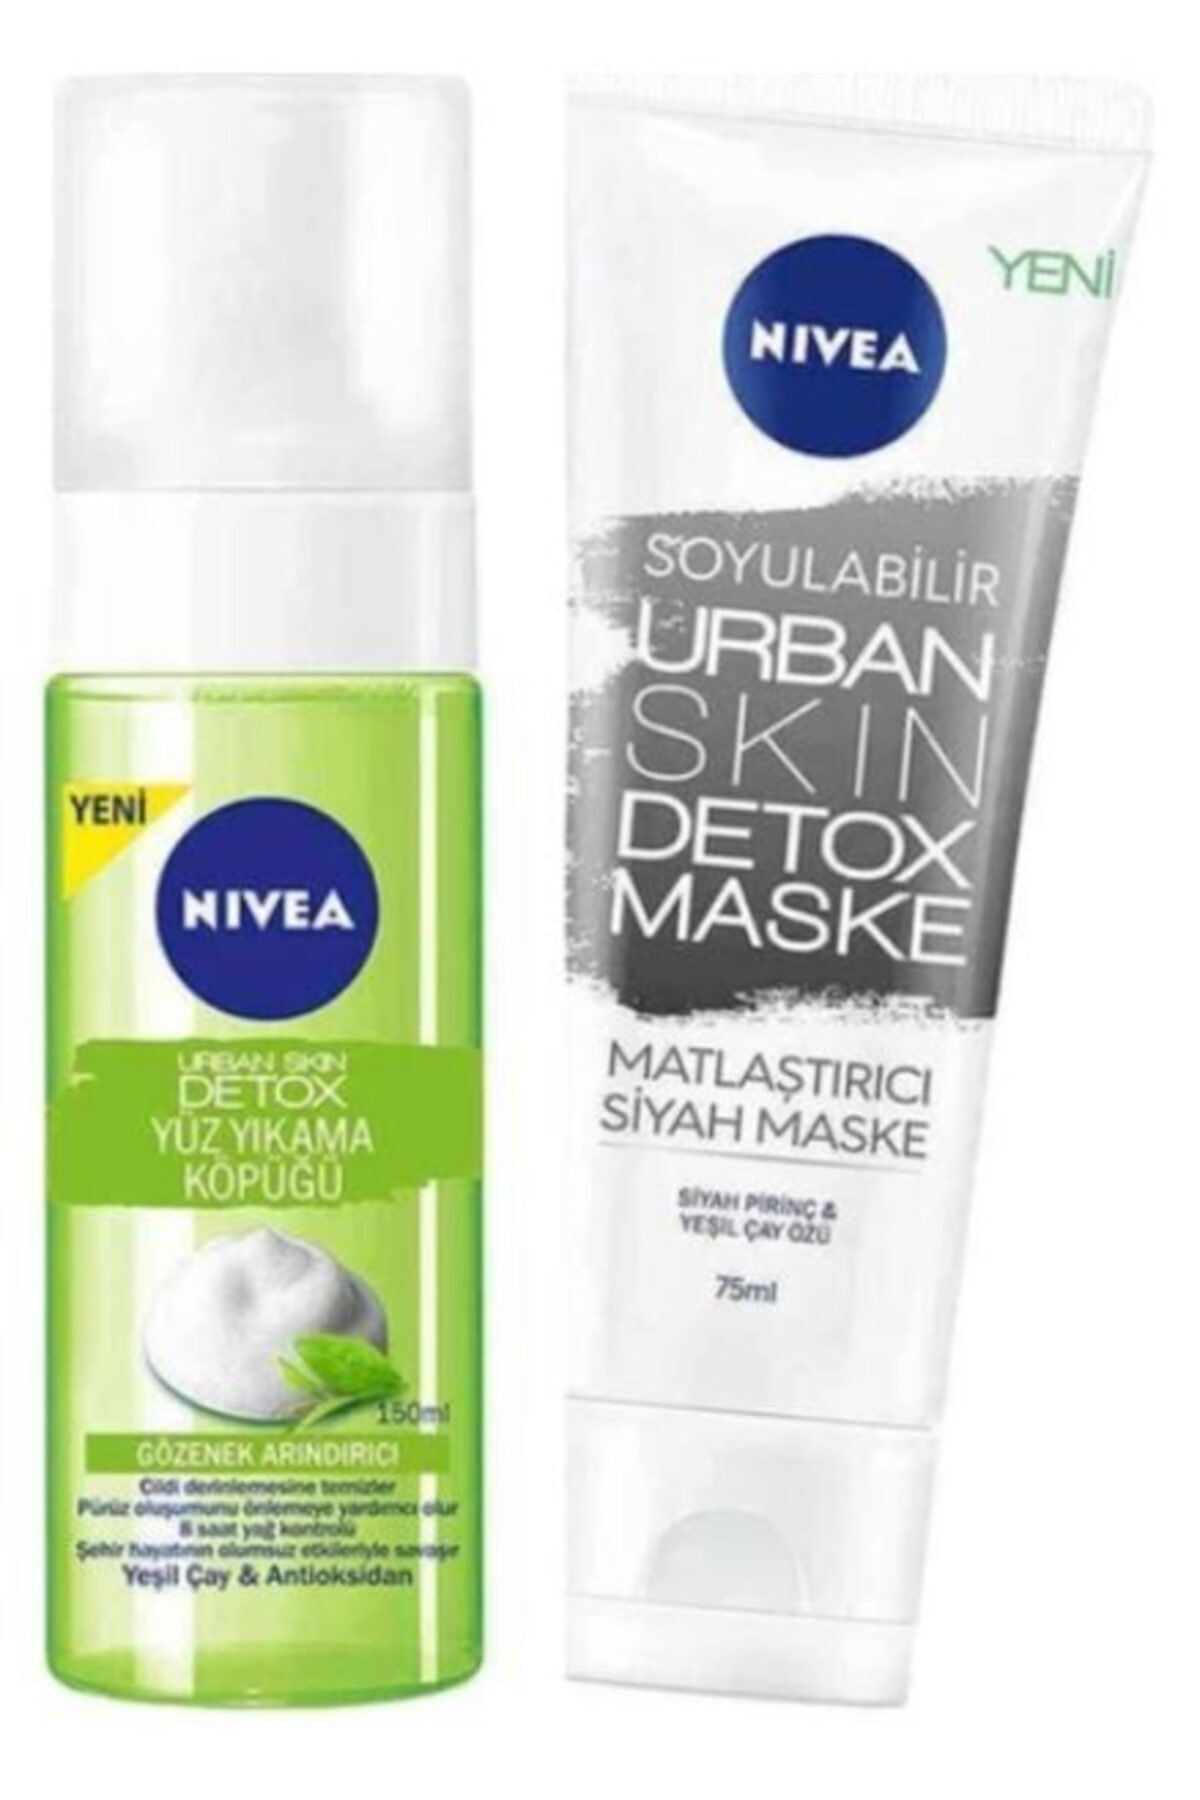 NIVEA Urban Skin Detox Yüz Yıkama Köpüğü 150ml+detox Maske 75ml